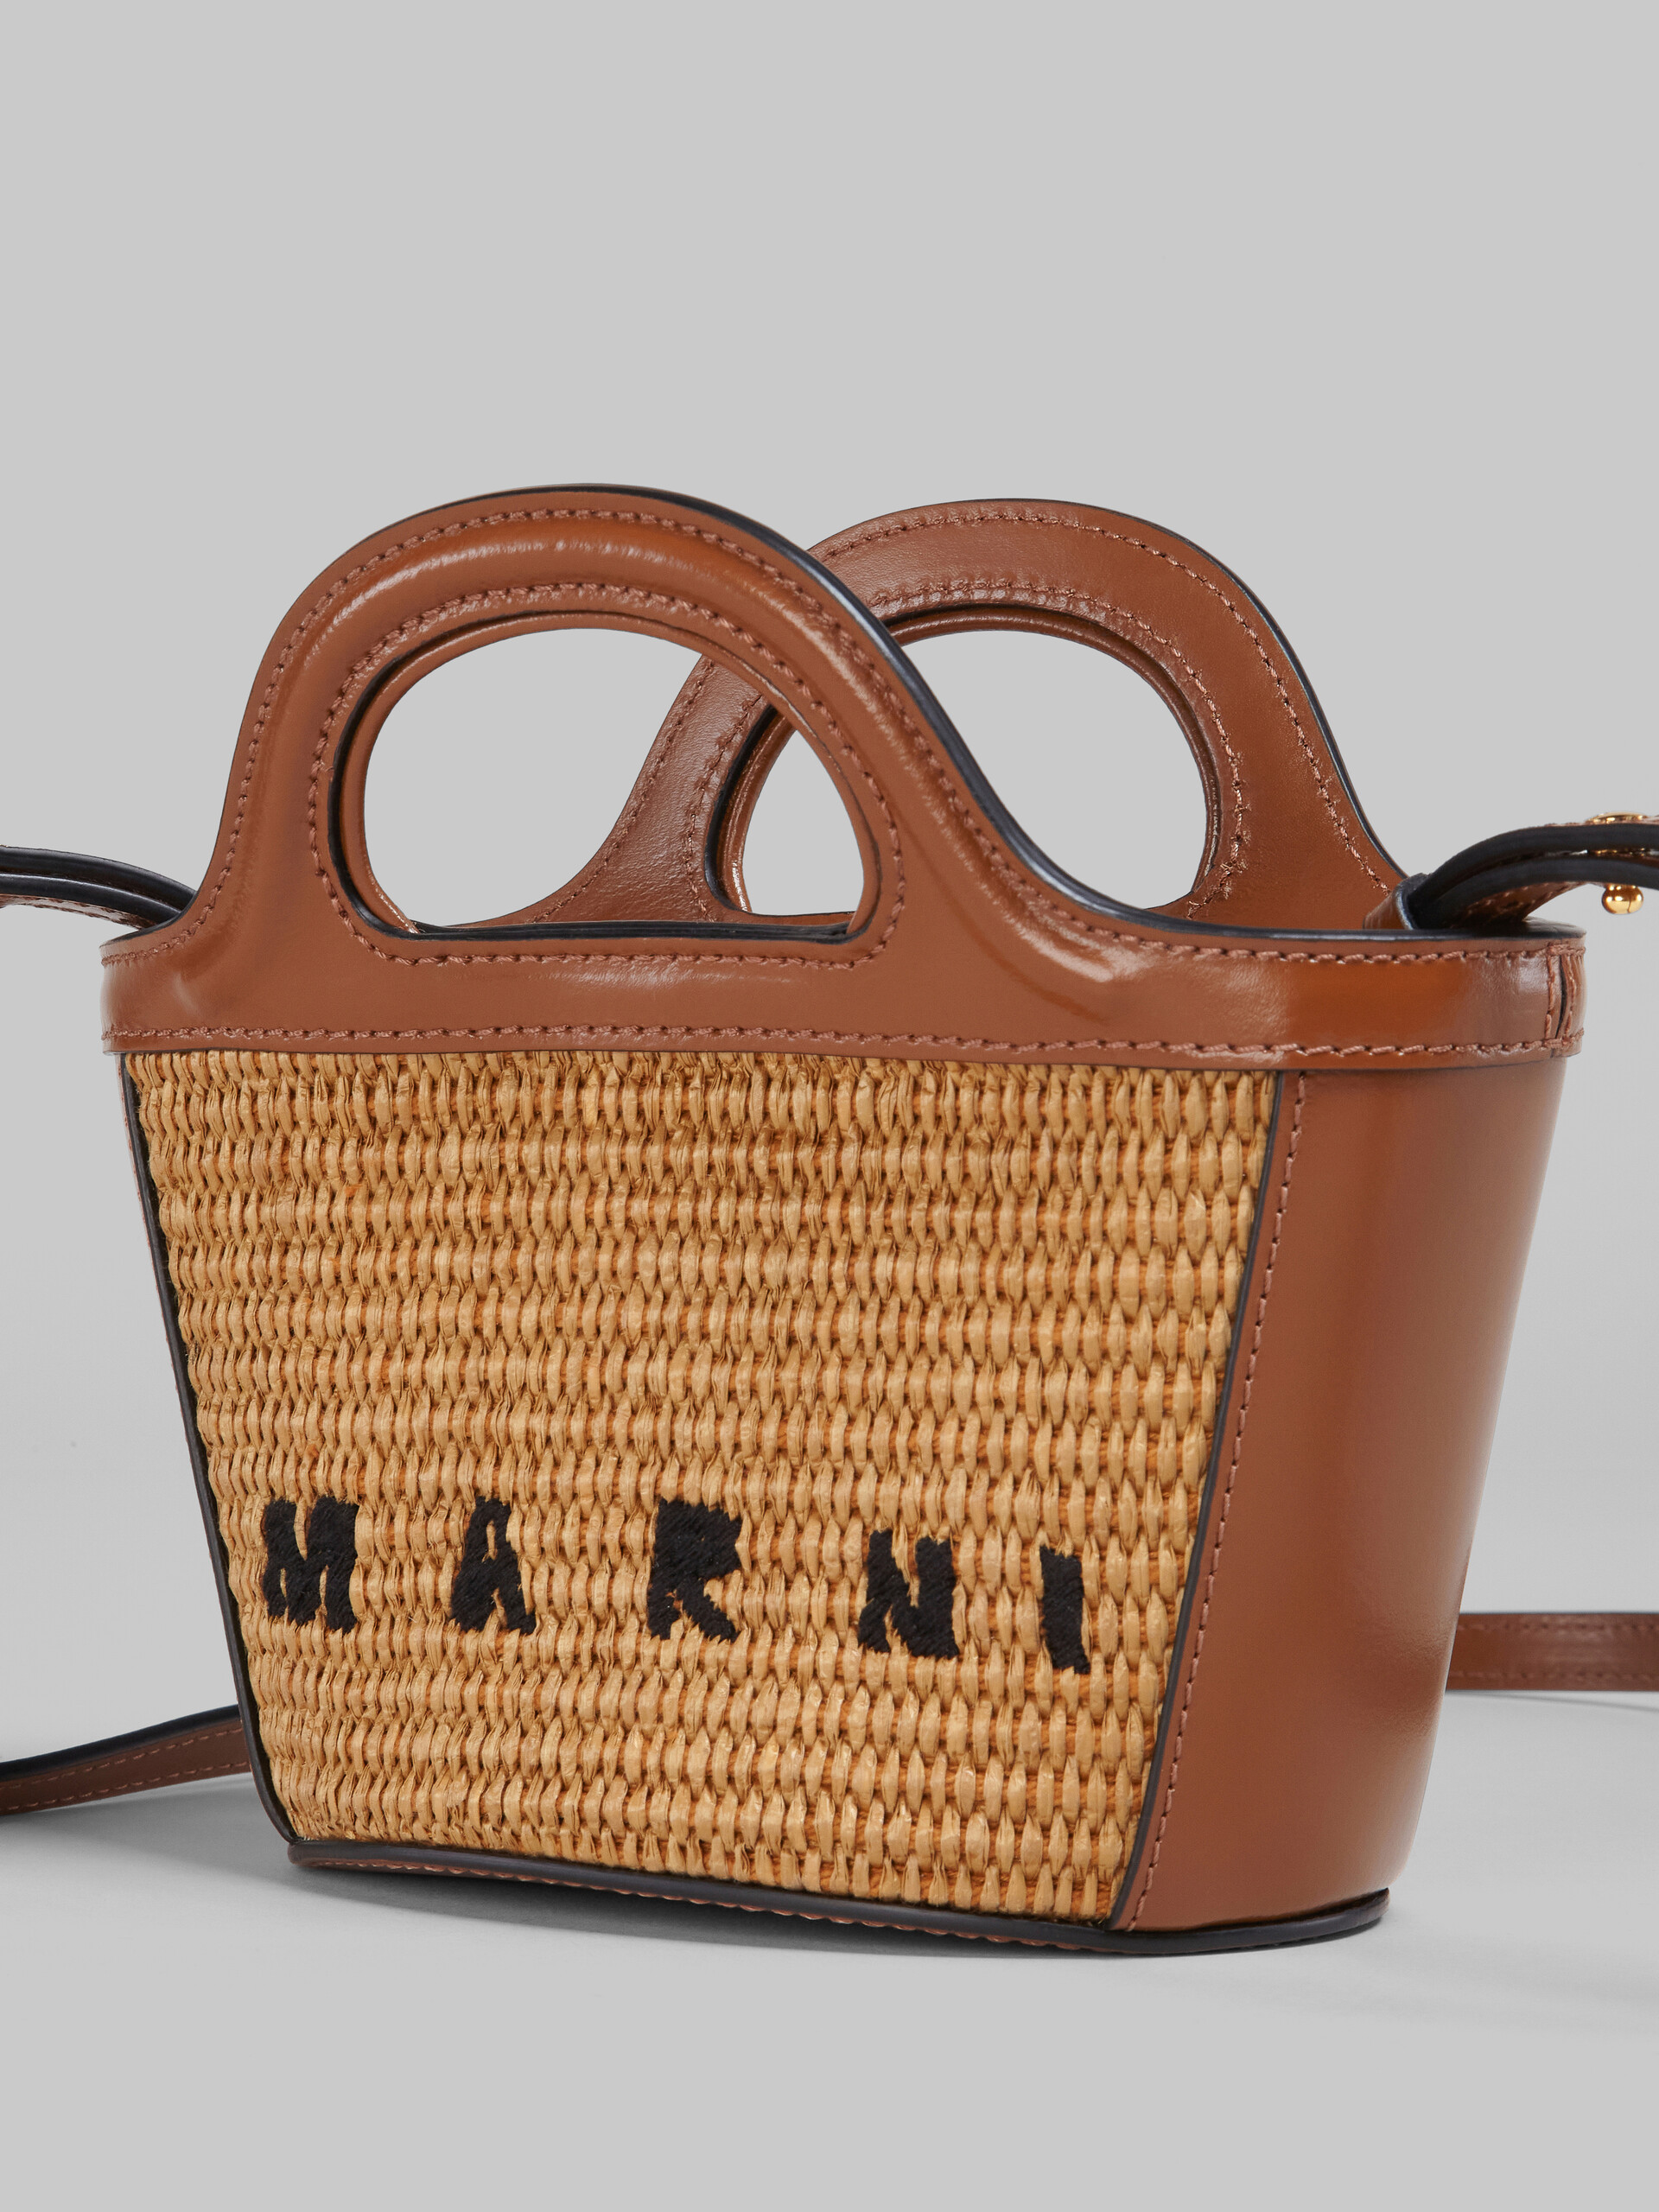 Tropicalia Micro Bag in brown leather and raffia - Handbags - Image 5